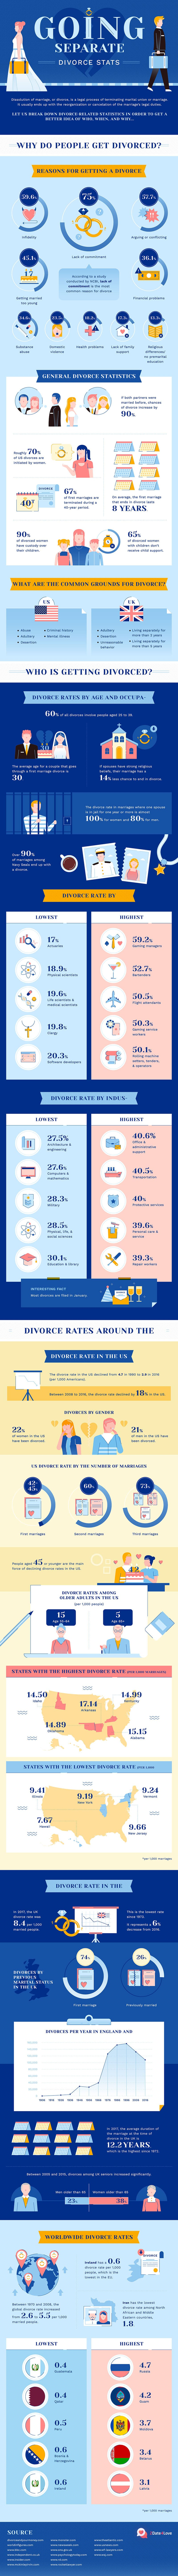 Divorce-Statistics-Infographic-1